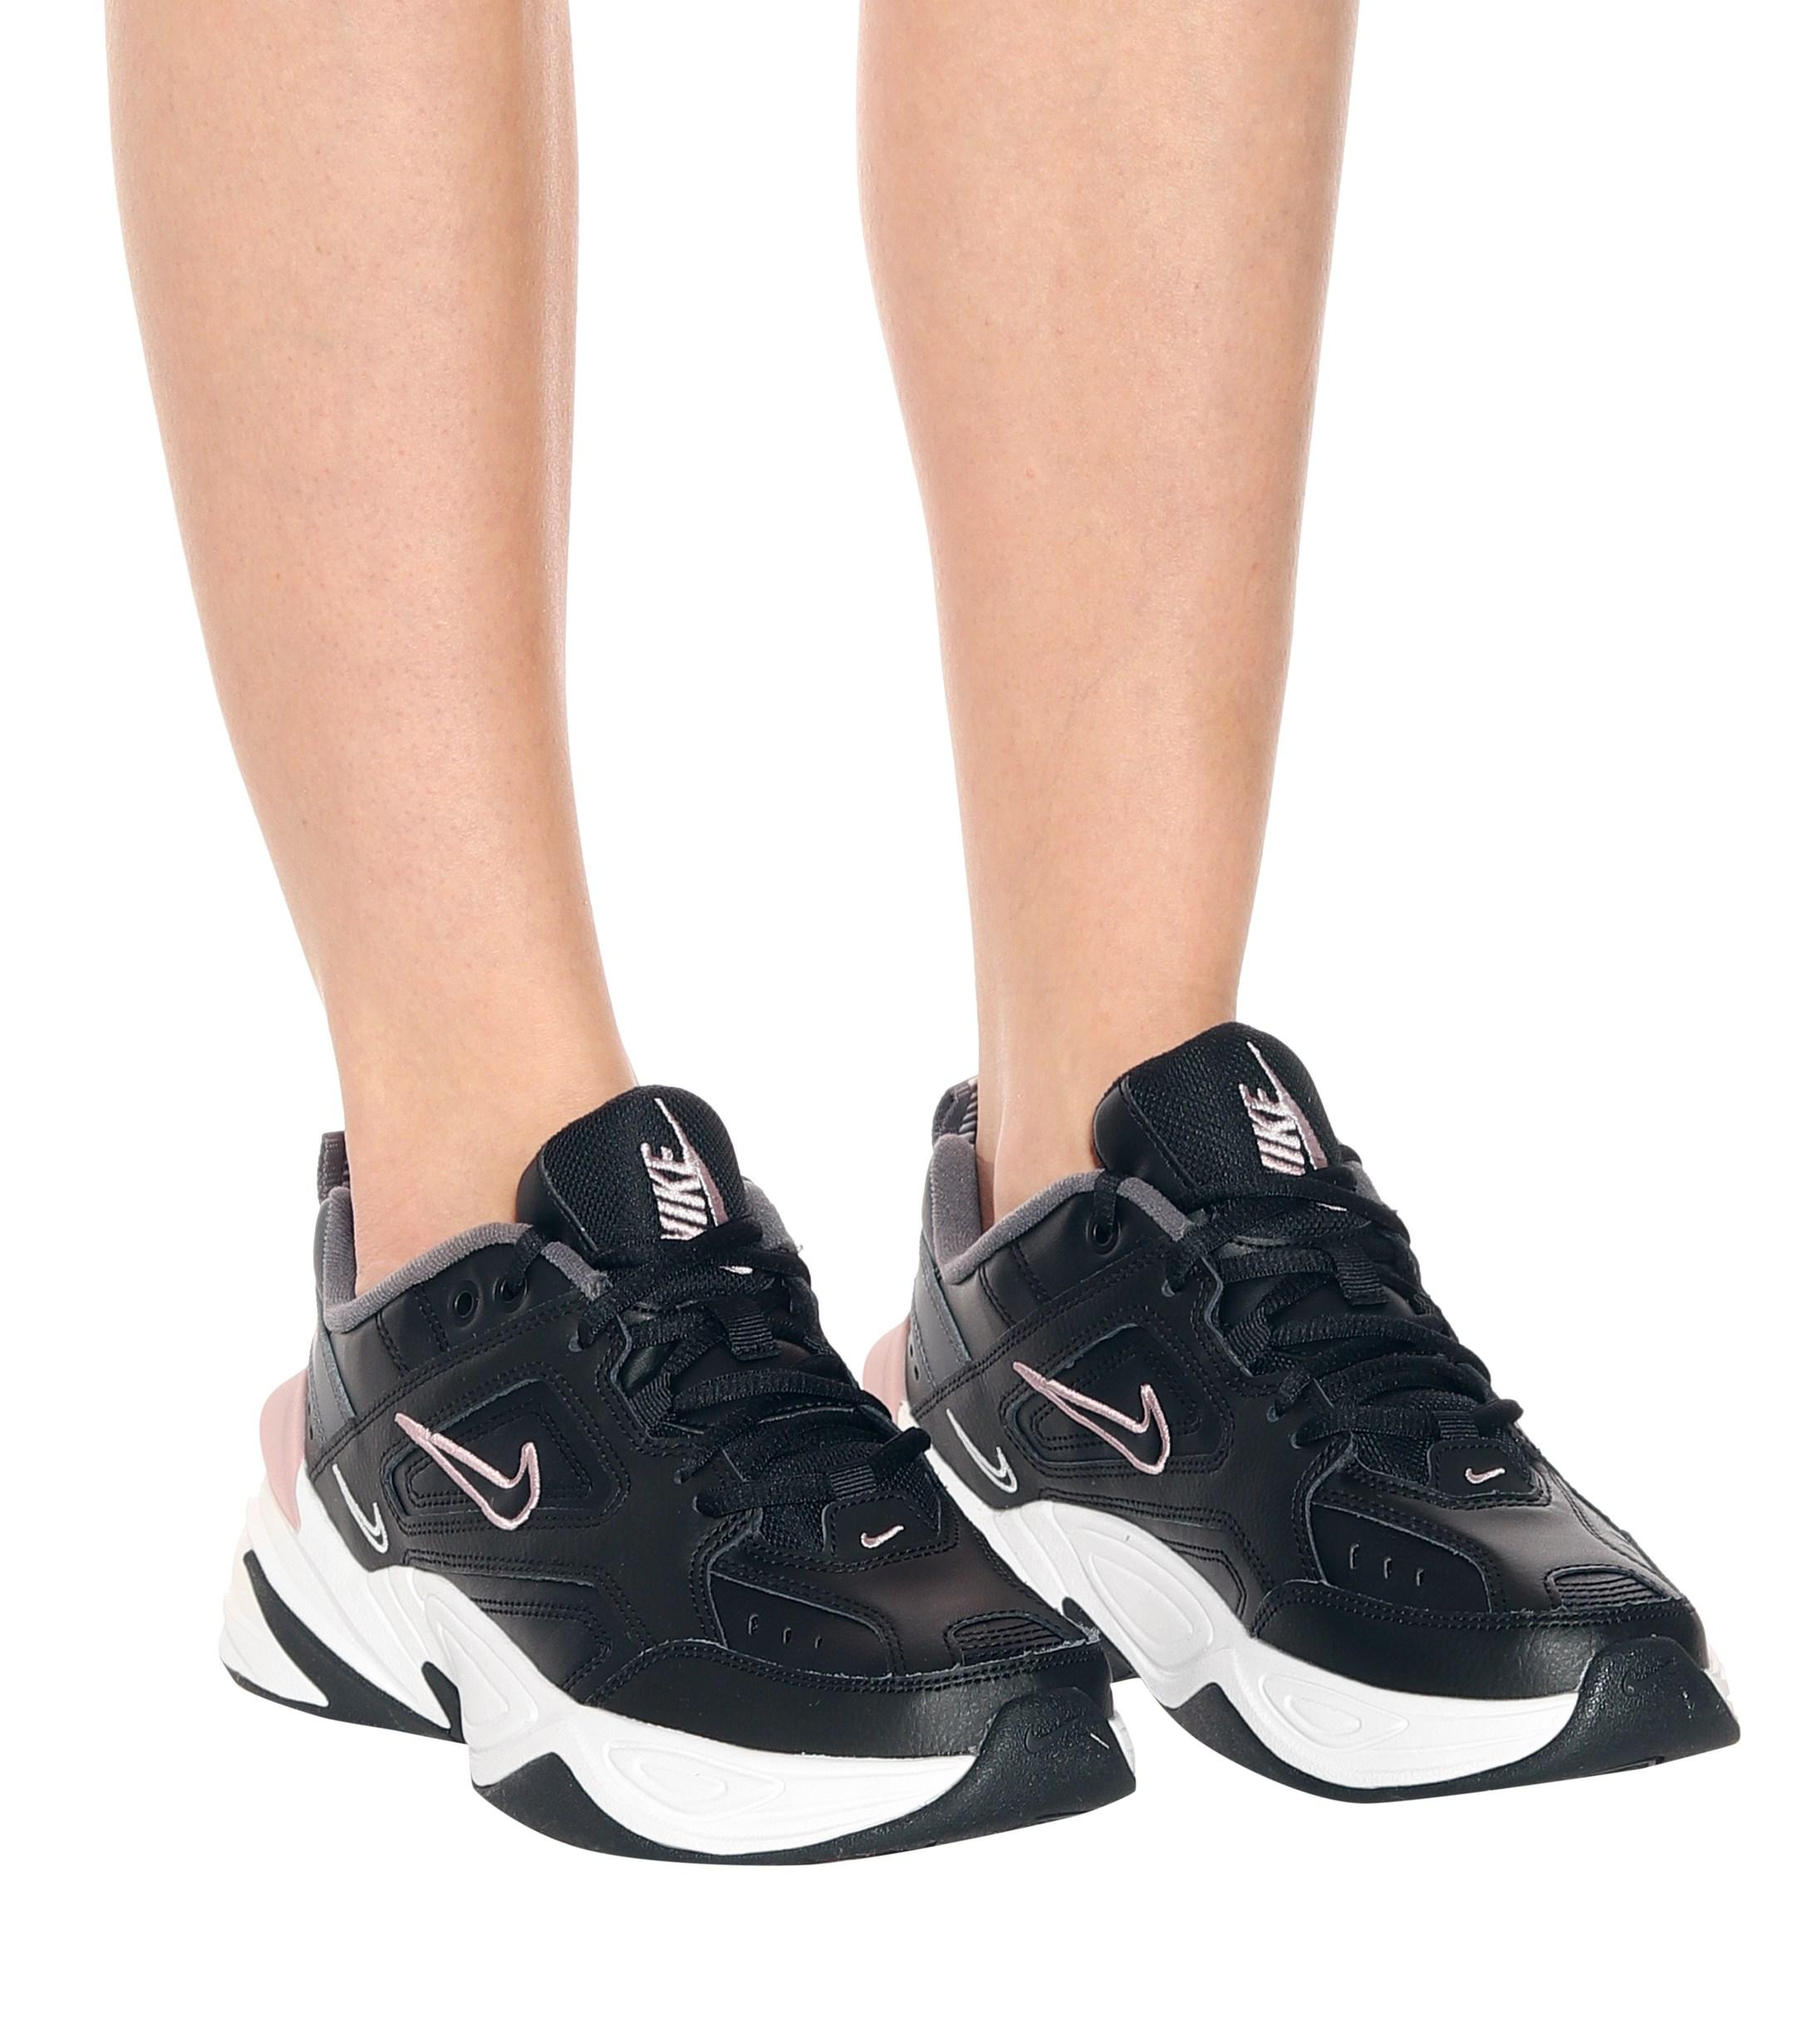 Nike M2k Tekno Sneakers in Black - Lyst